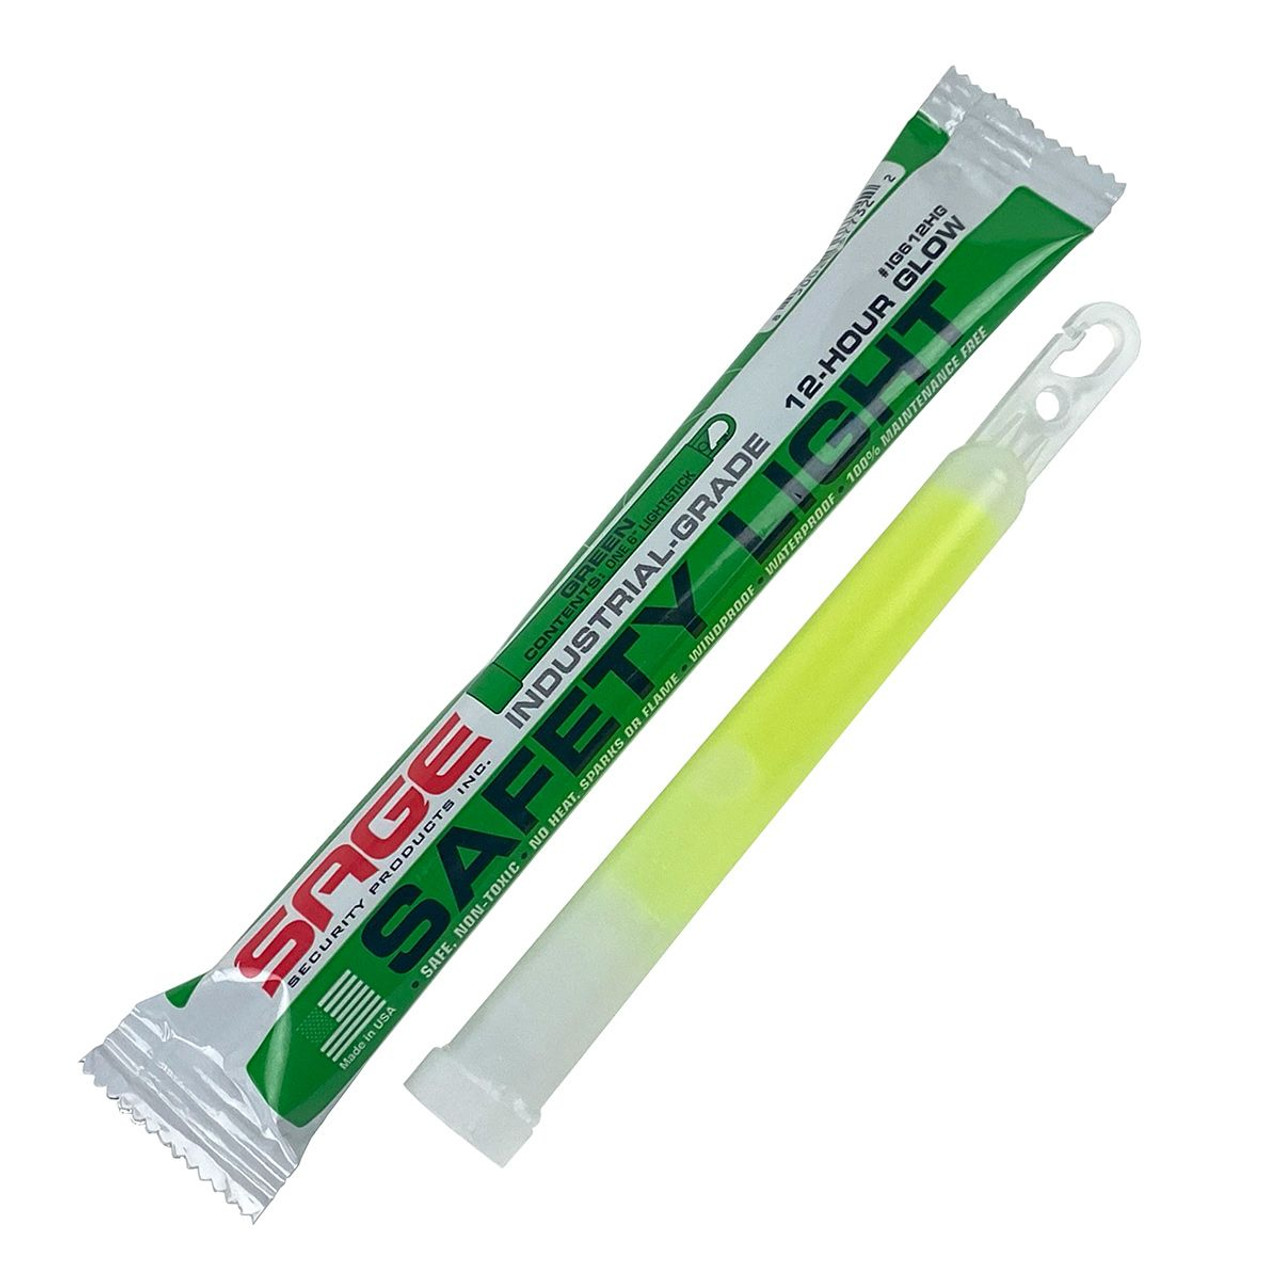 Sage 12-Hour Green Glow Safety Light Stick - 6